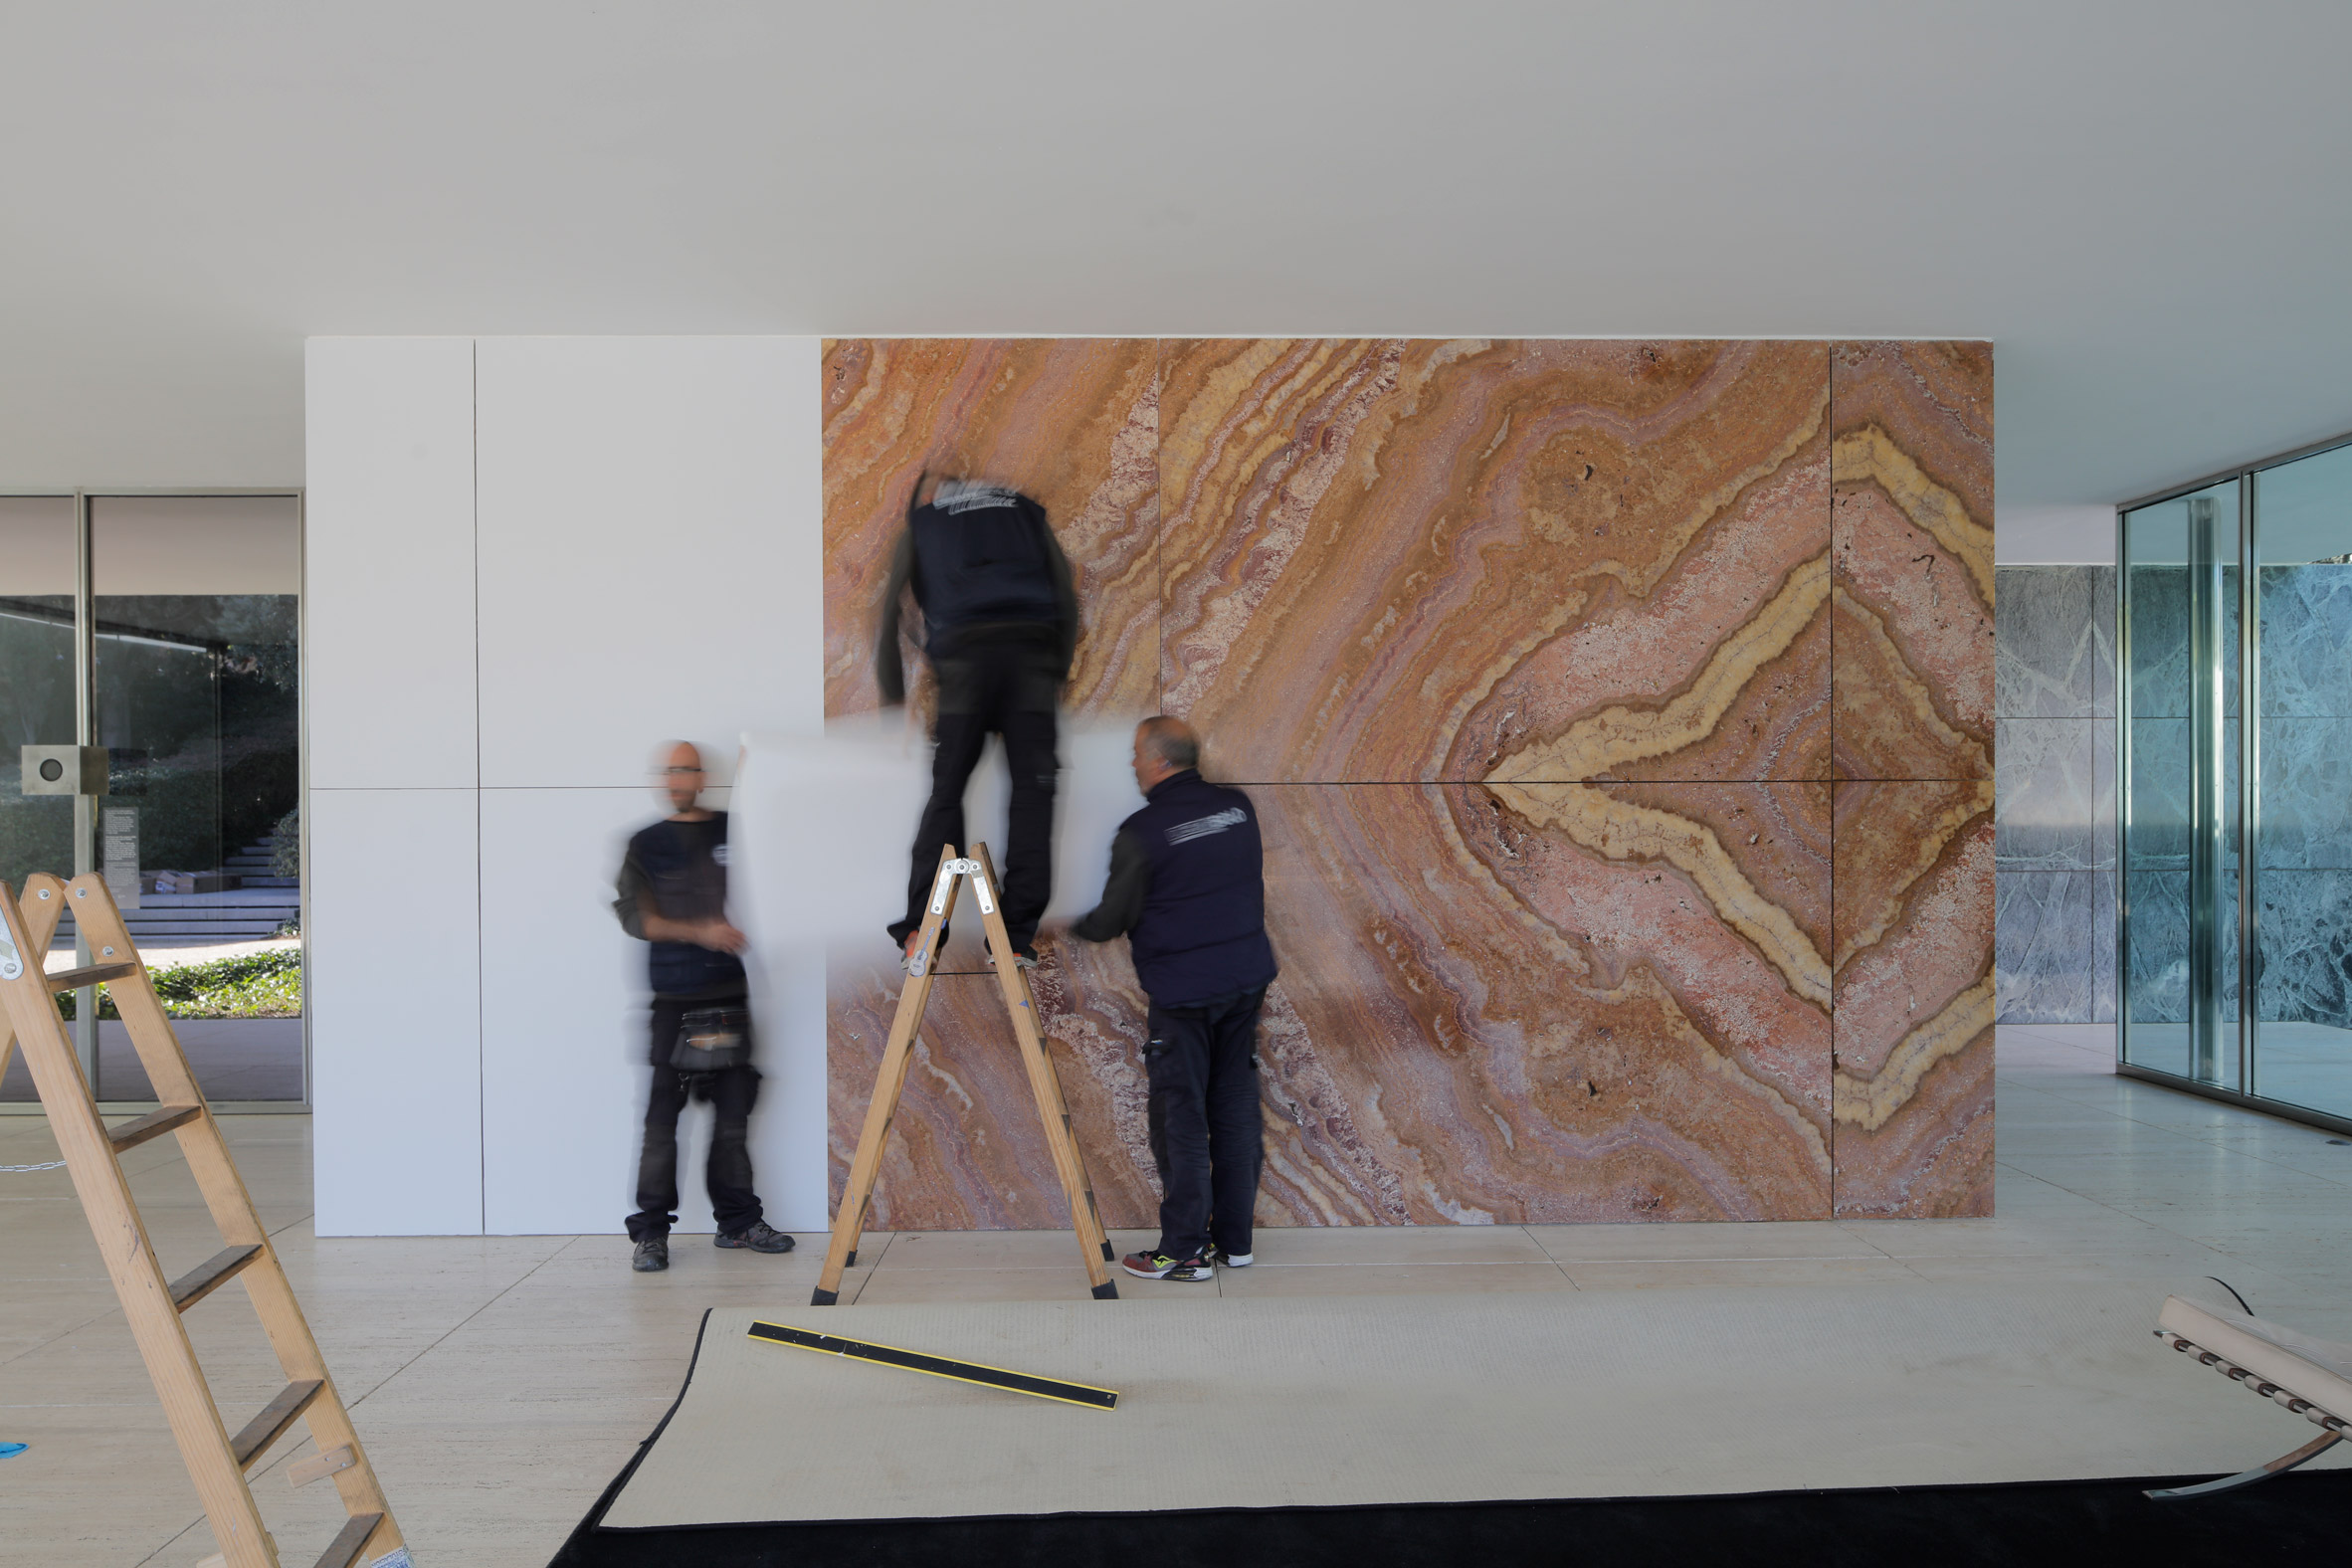 Mies van der Rohe's Barcelona Pavilion loses its marble walls-12